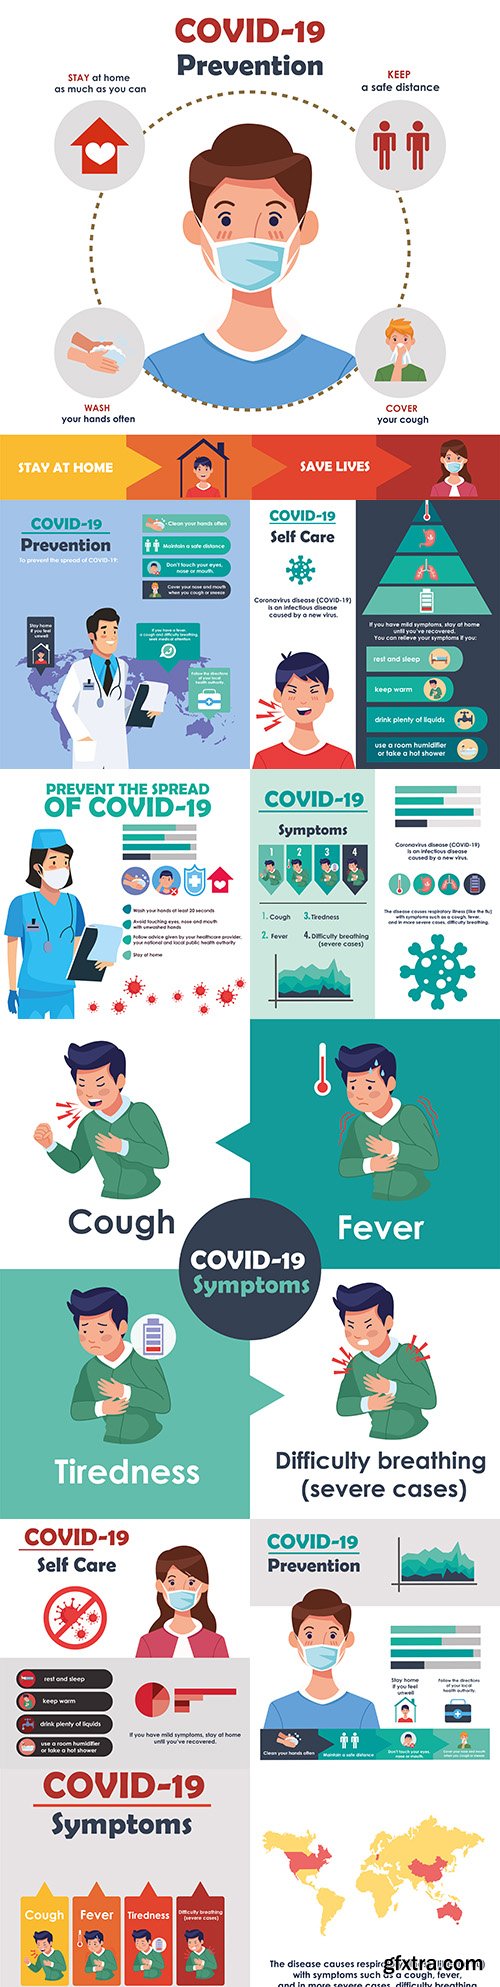 Covid-19 prevention methods and disease imptomas
